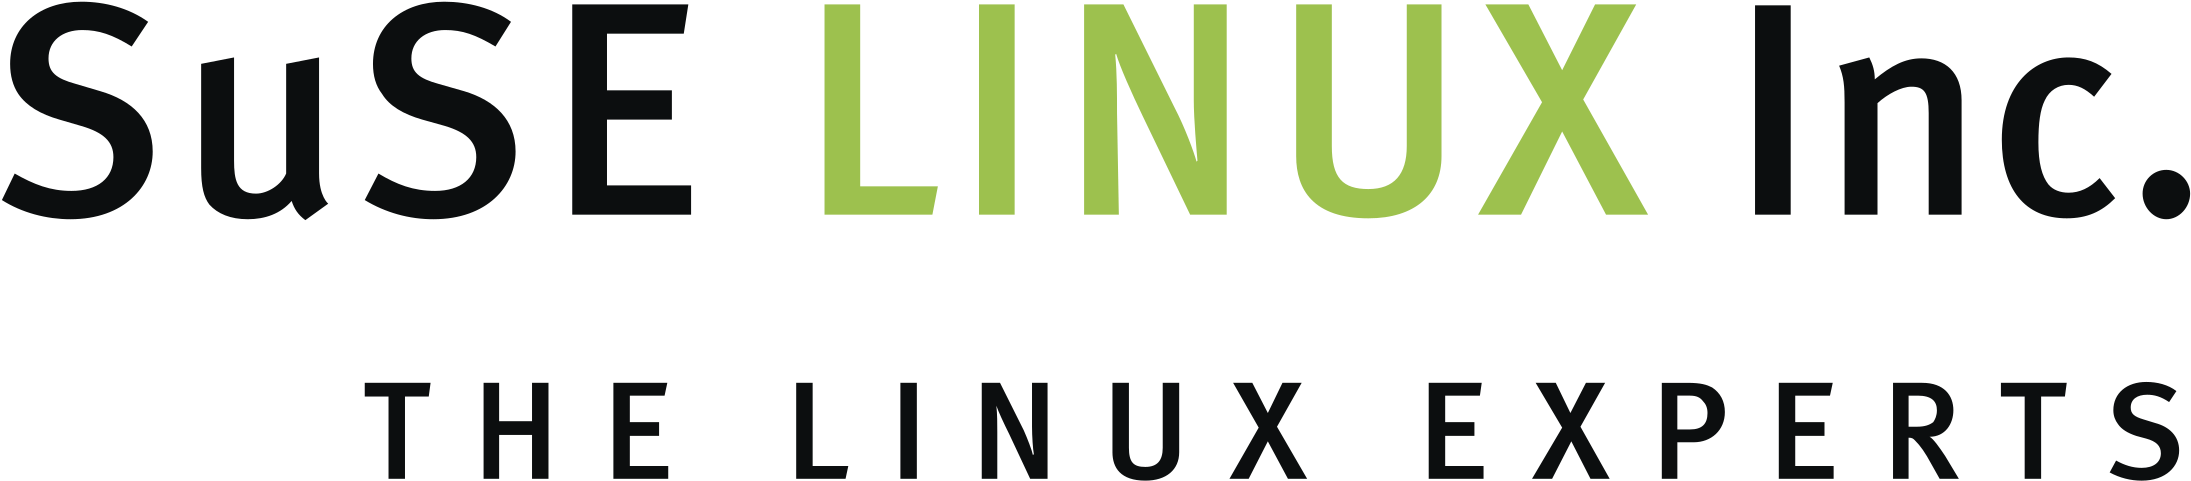 Suse Linux Logo Png Transparent - Parallel Clipart (2400x2400), Png Download